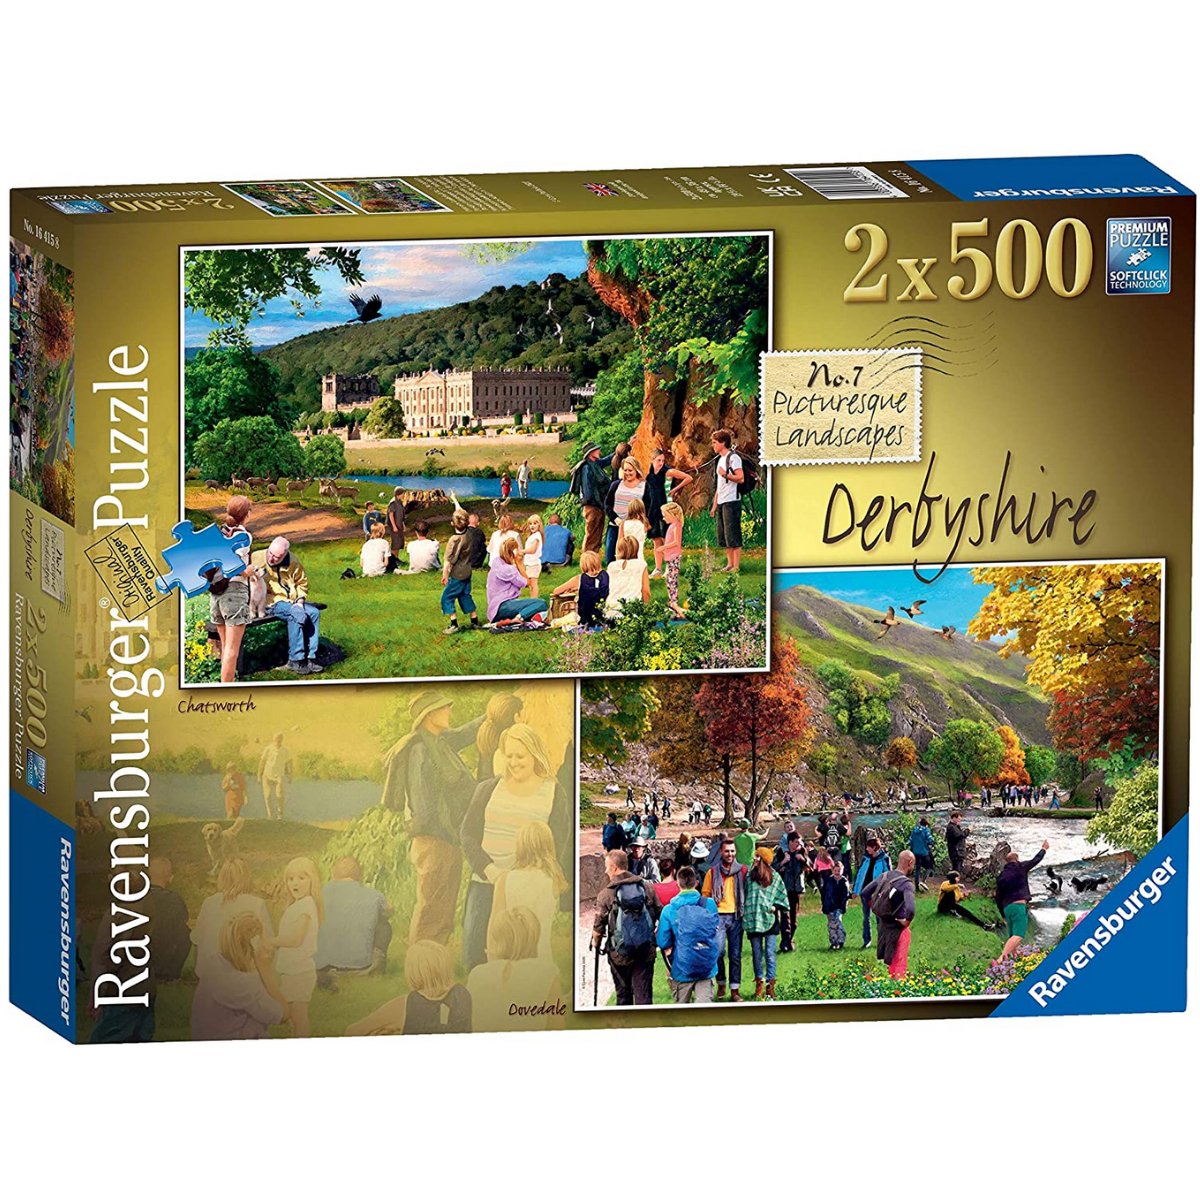 Ravensburger Picturesque Derbyshire, Chatsworth & Dovedale (2x 500 Pieces) - Phillips Hobbies